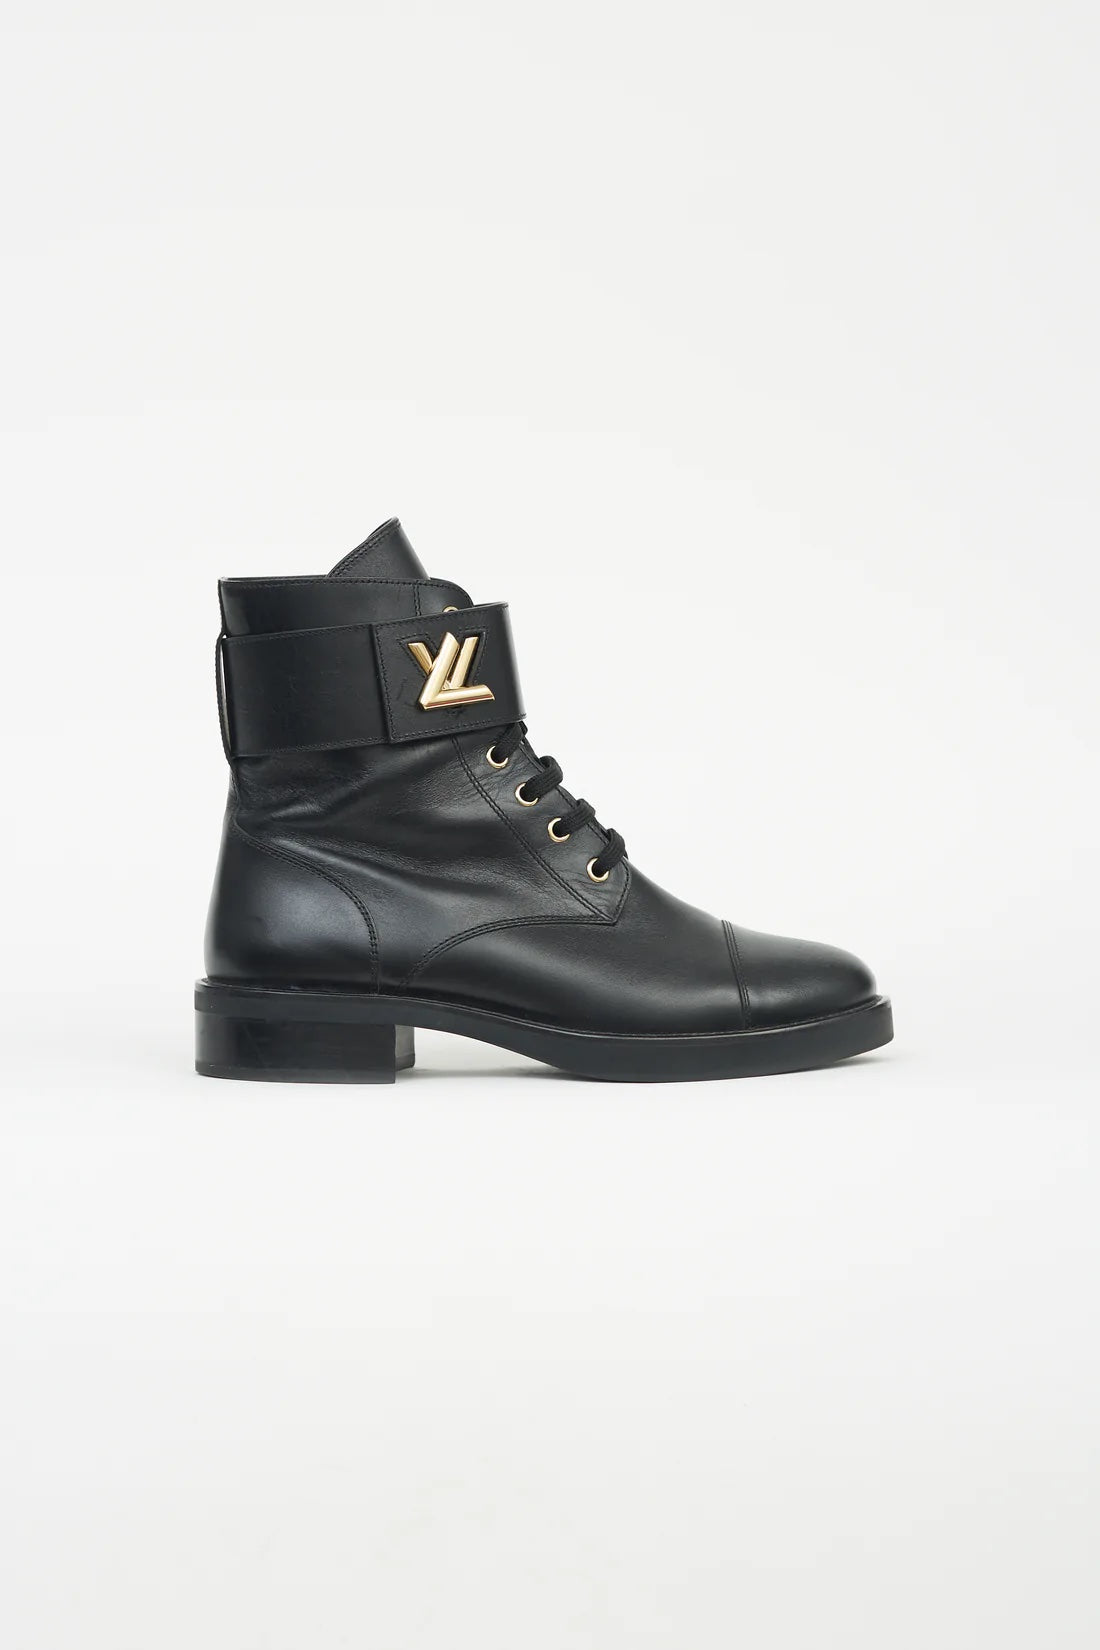 Louis Vuitton Brown Suede/Shearling Ranger Wonderland Combat Boots